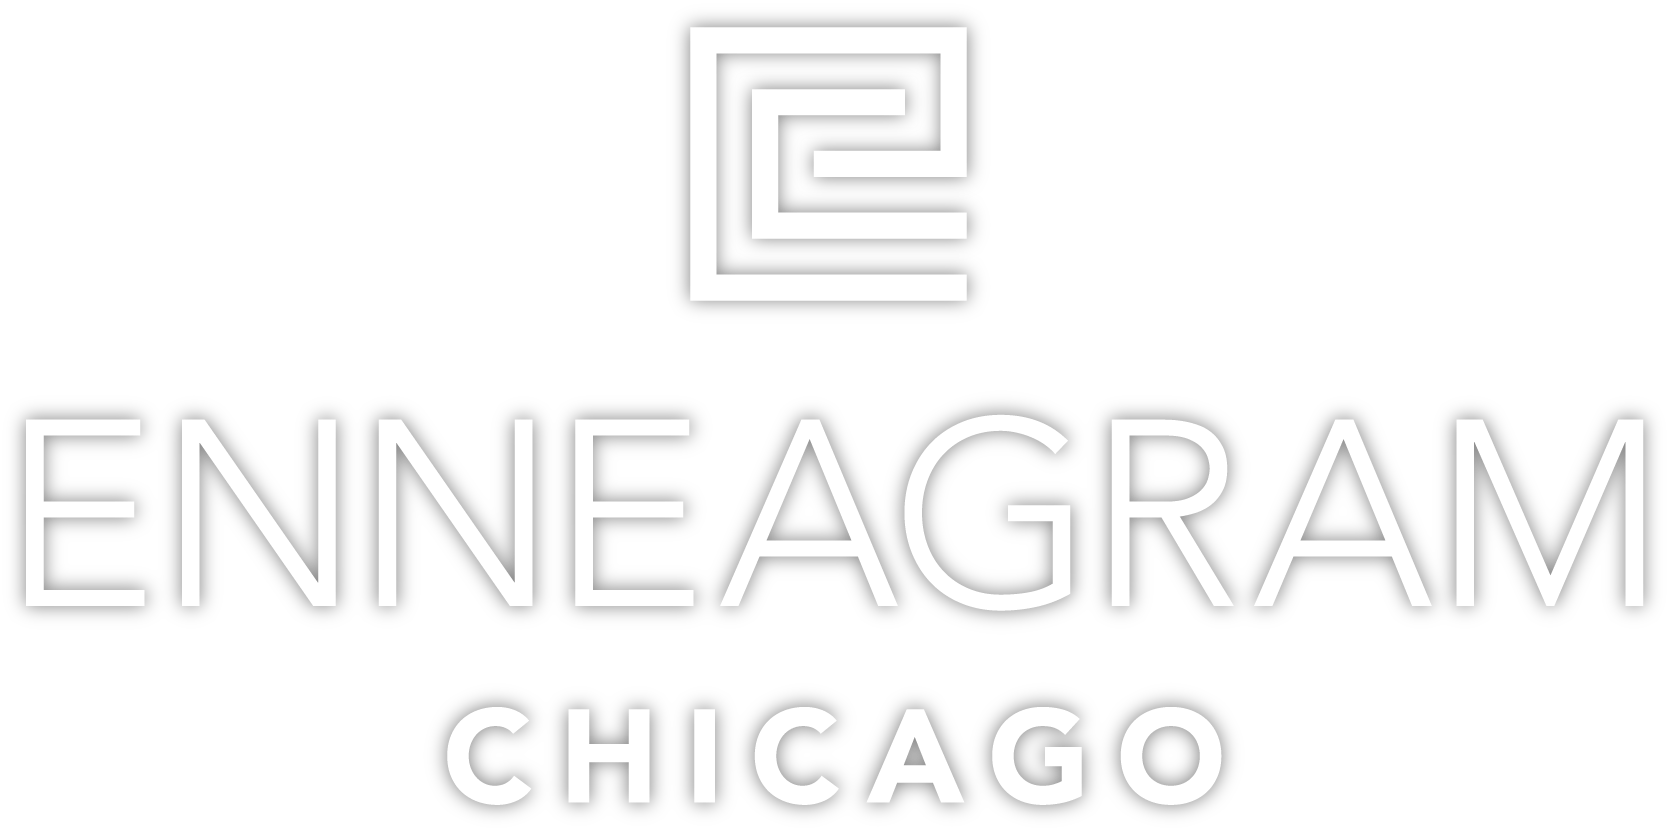 Enneagram Chicago